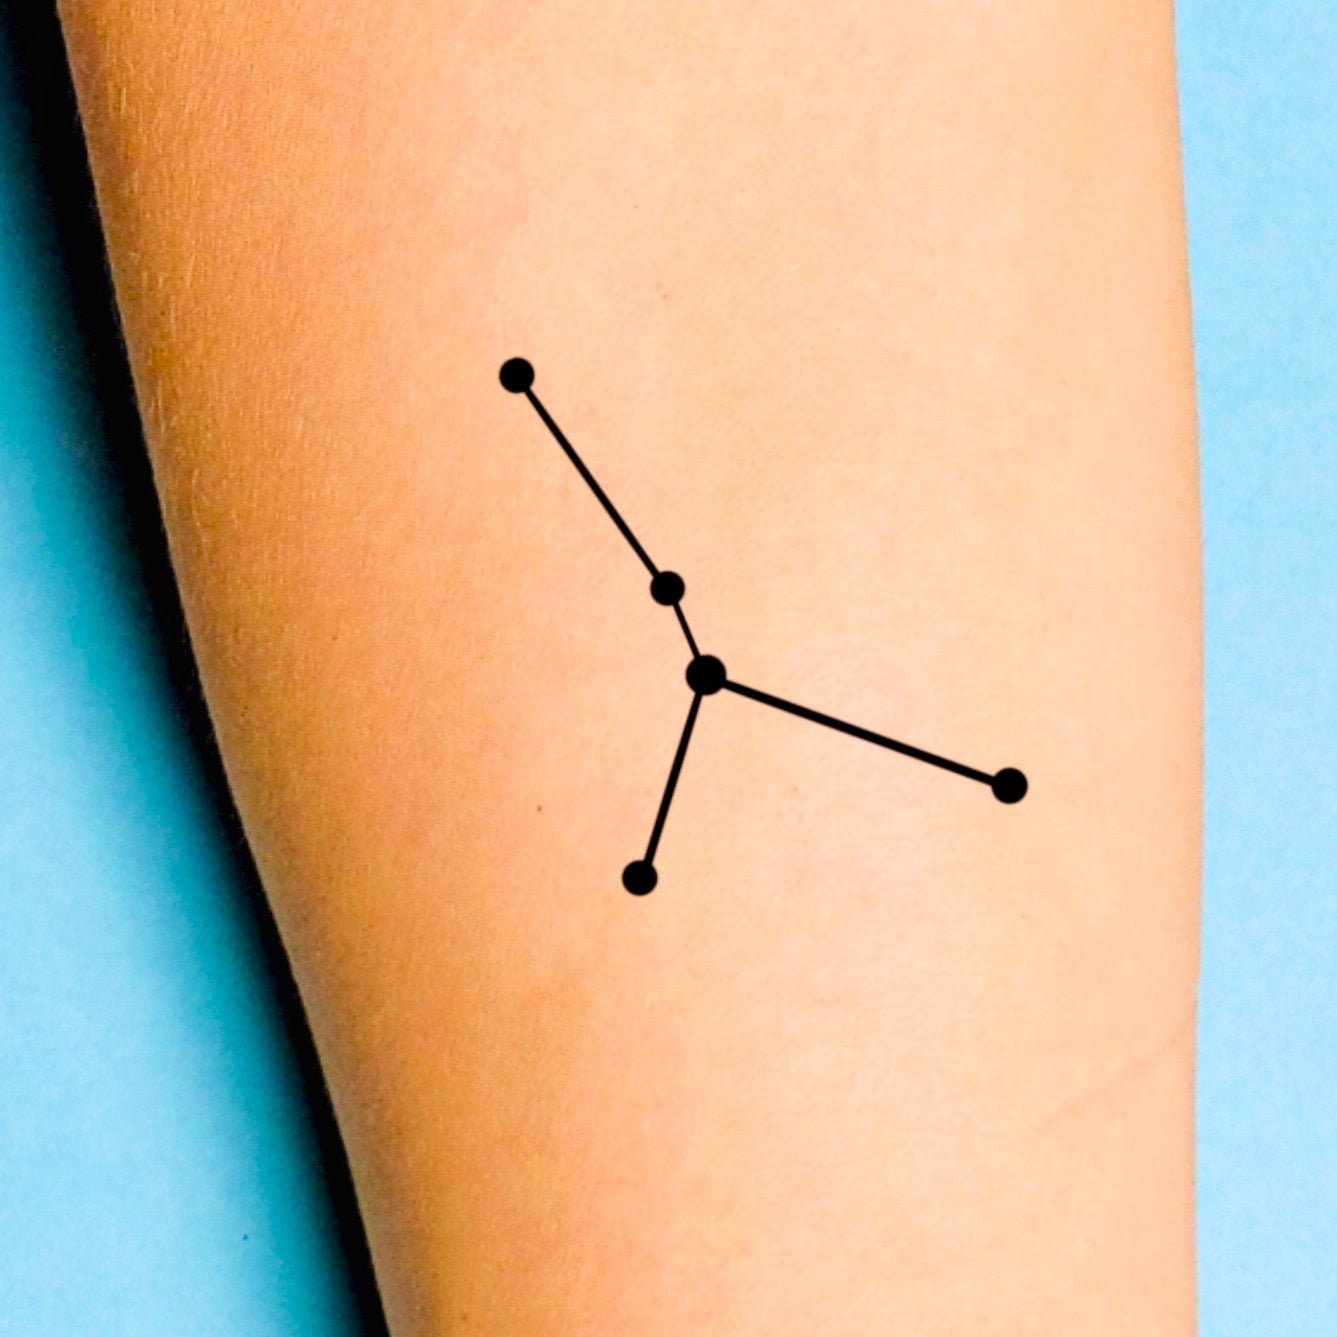 53 Captivating Zodiac Cancer Tattoos for Women that You'll Cherish